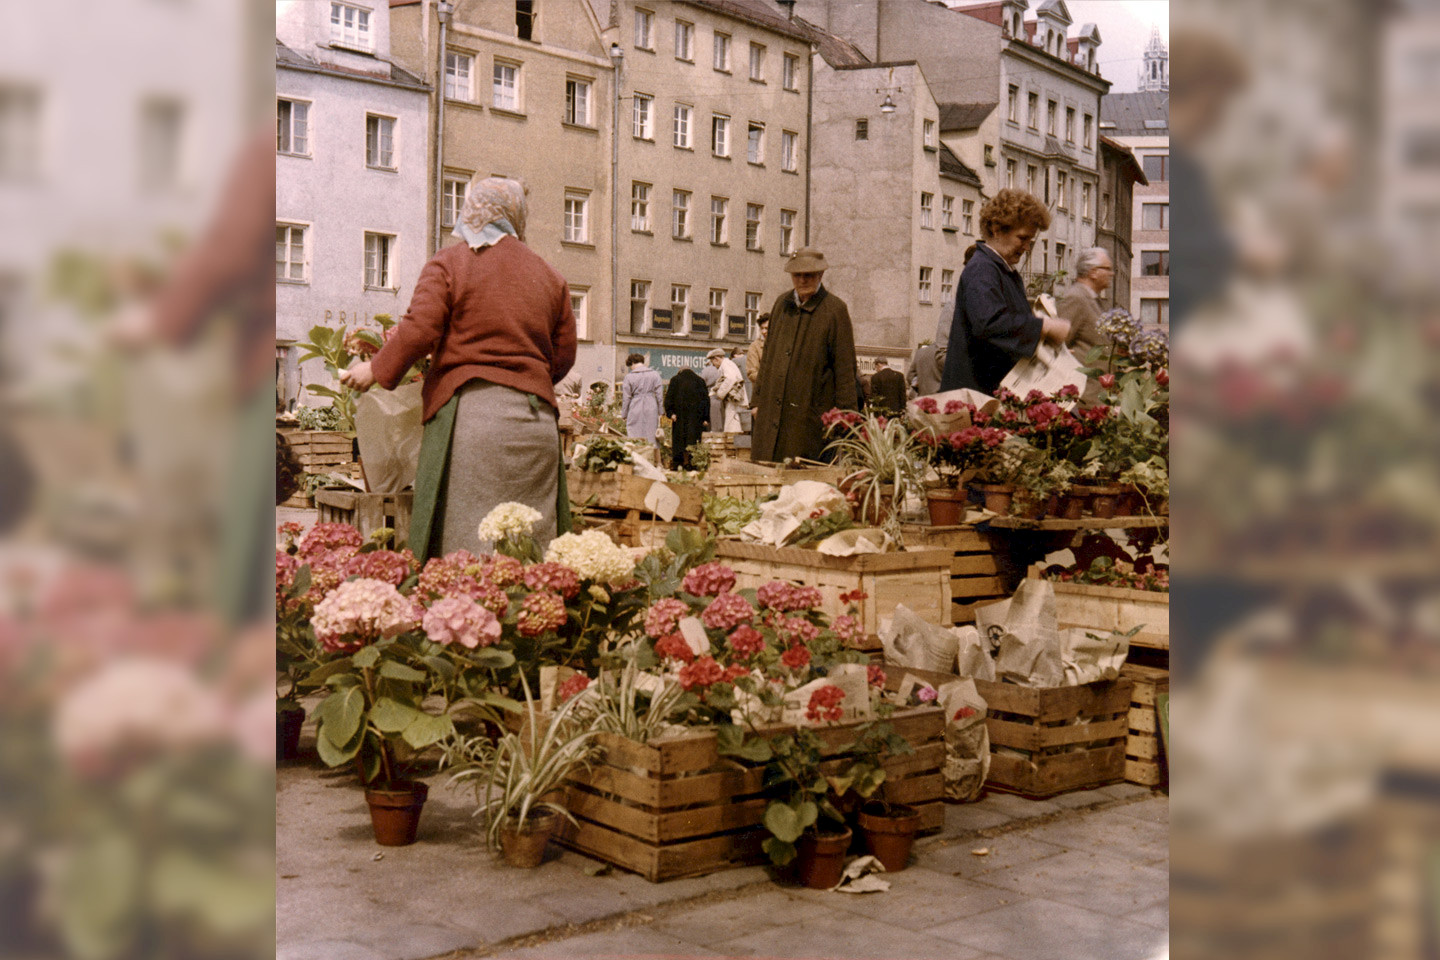 Flower market by Herbert Wendling